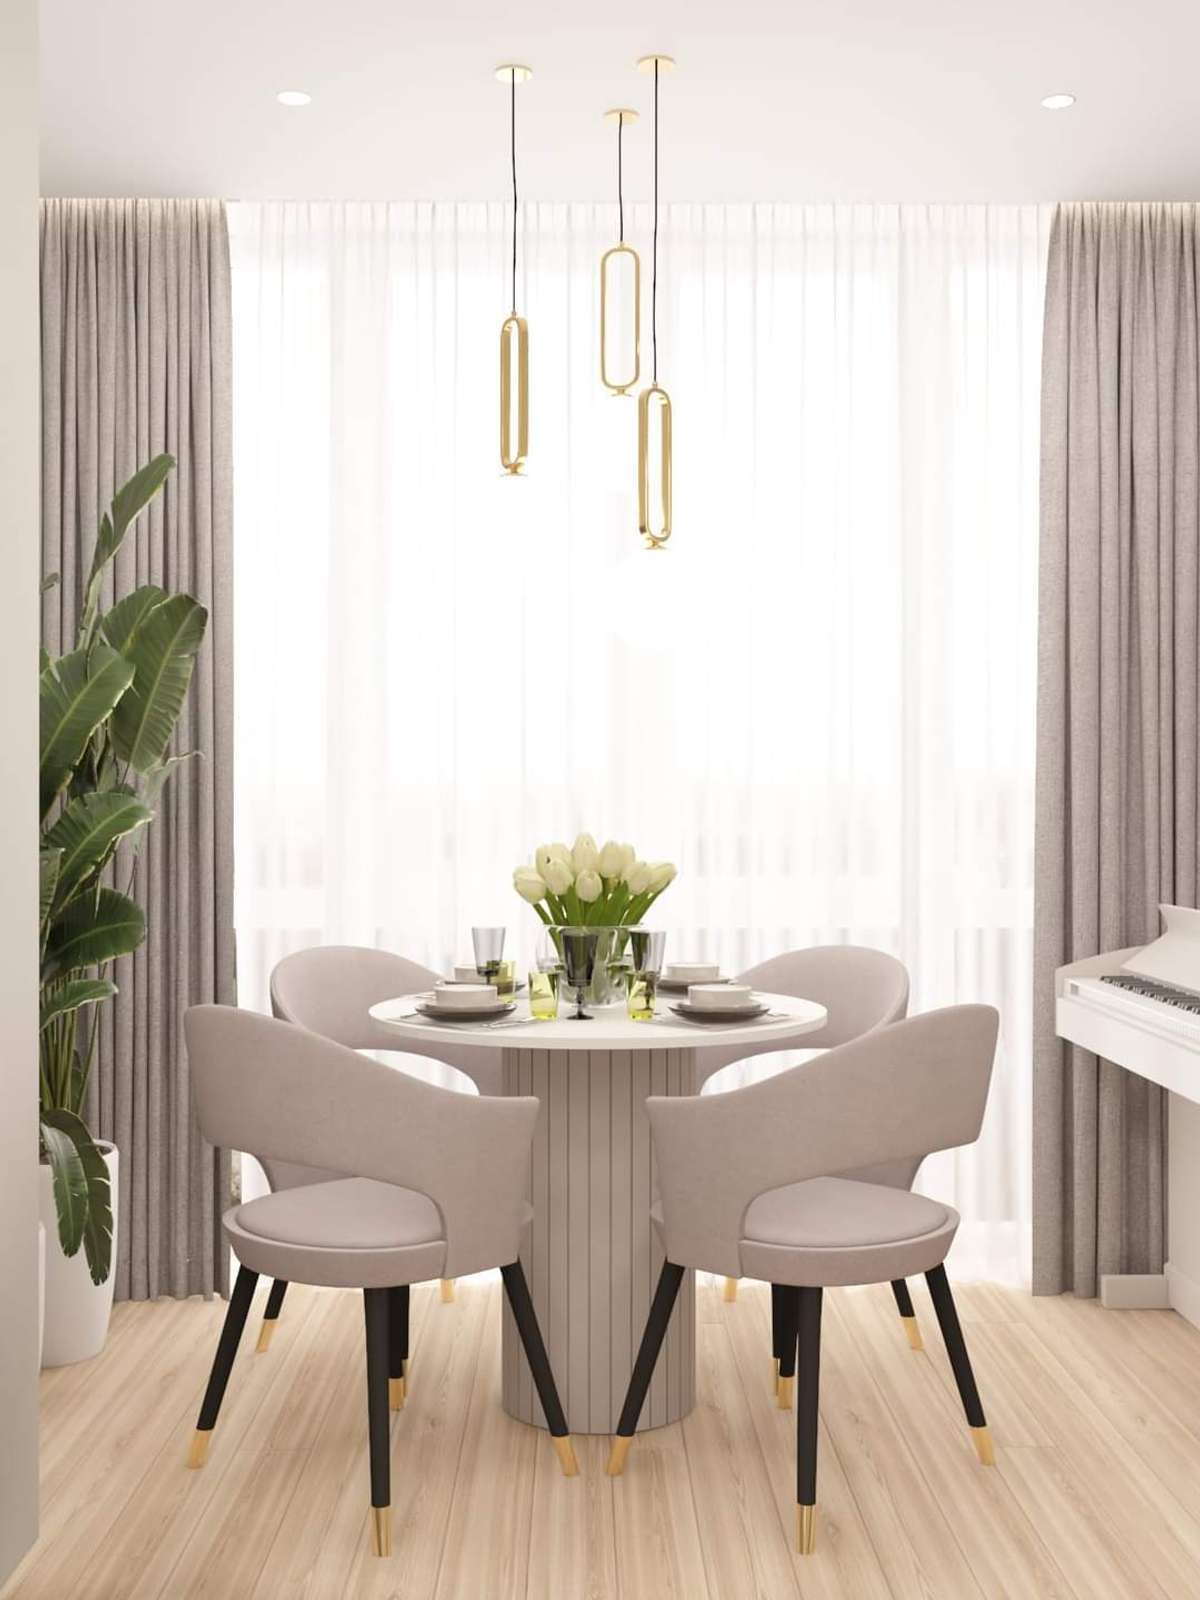 Furniture, Lighting, Living, Table, Dining Designs by Architect nasdaa interior pvt Ltd, Delhi | Kolo